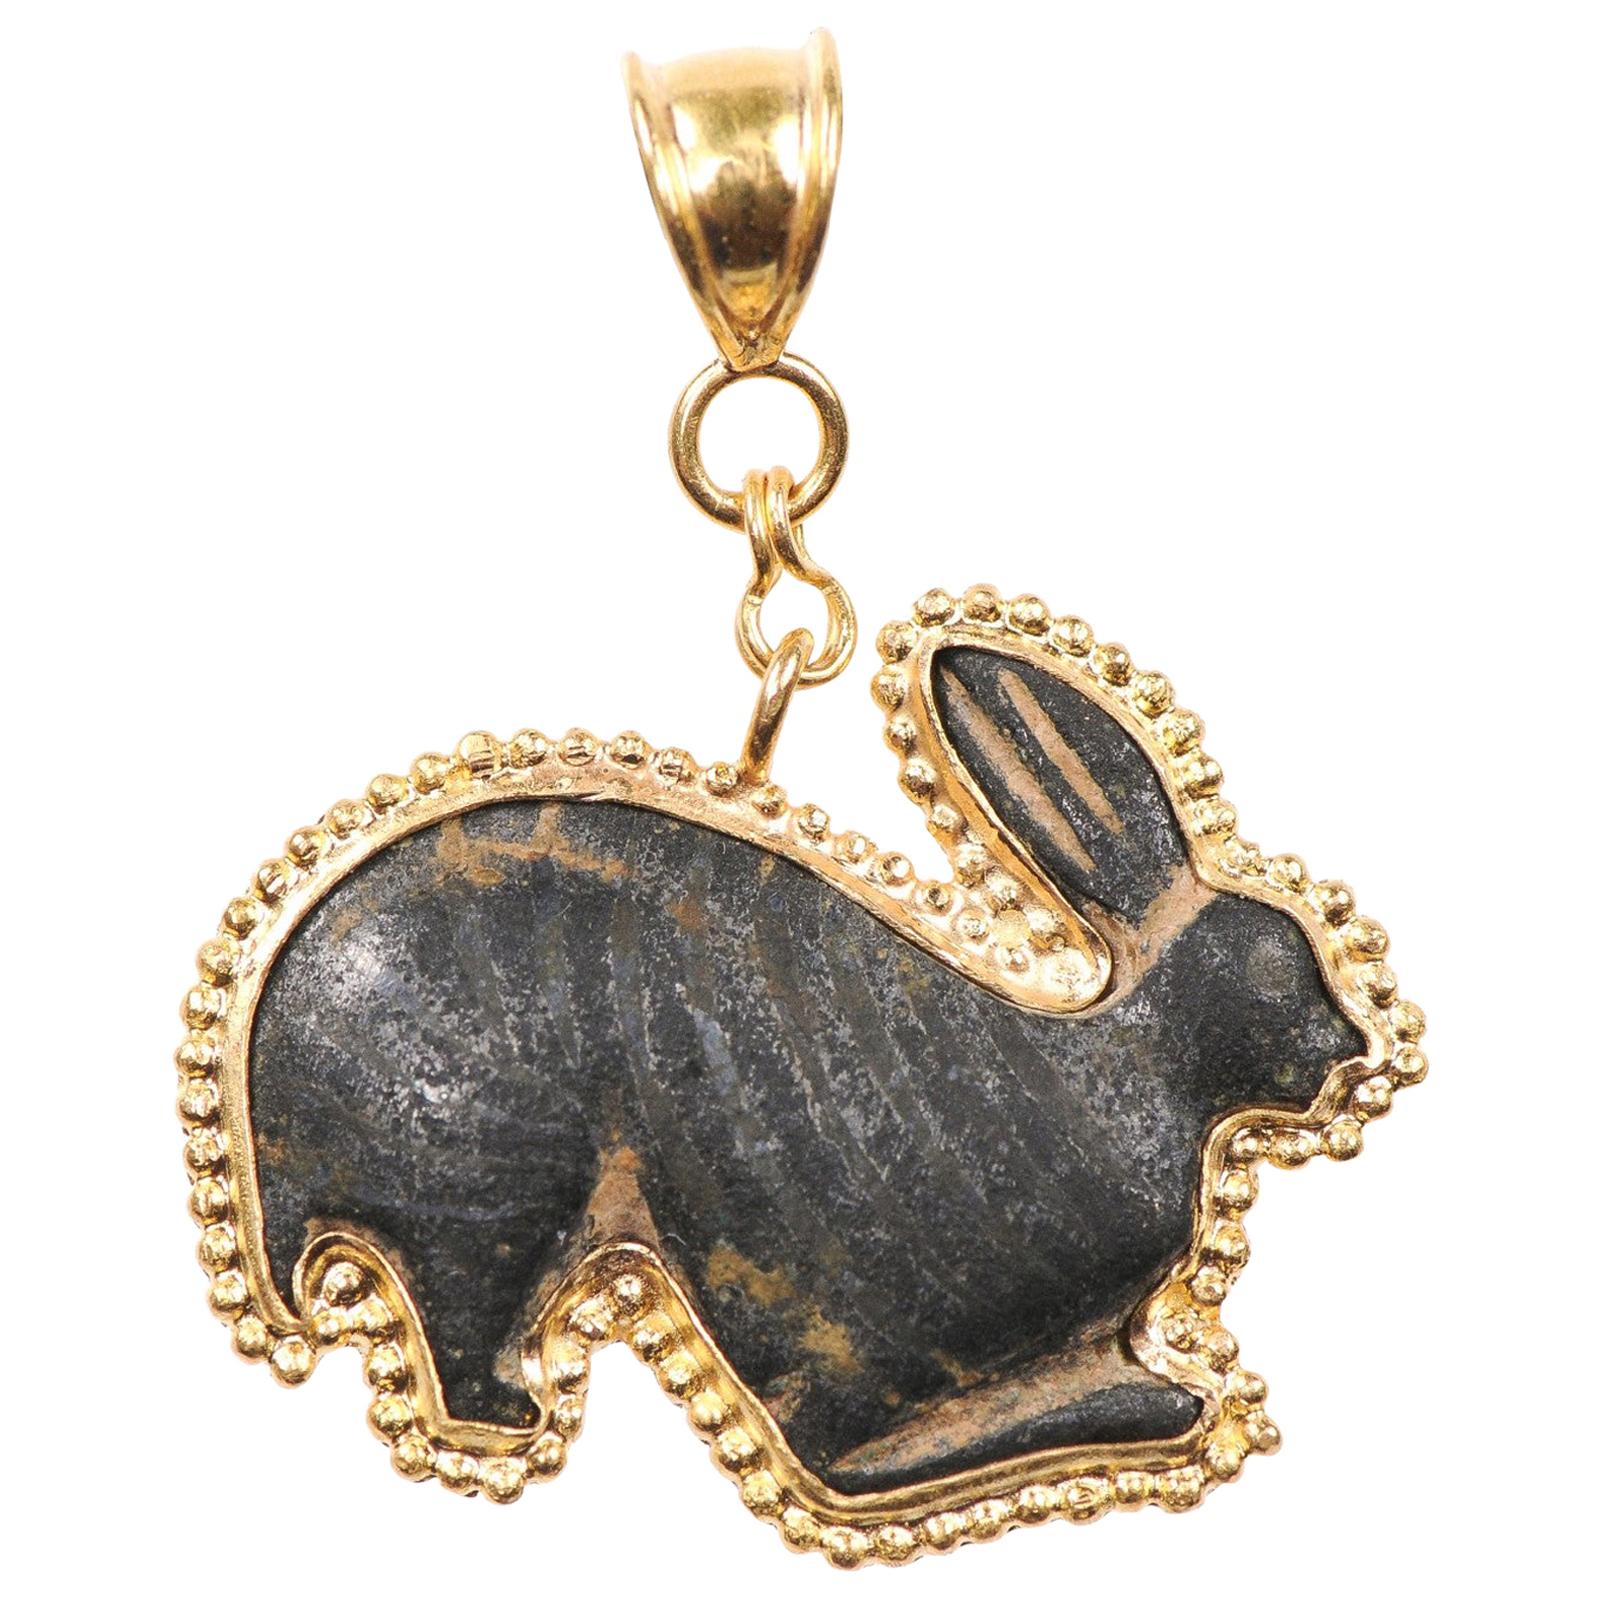 Authentic Roman Bronze Rabbit Fragment Set in New 21-Karat Gold Pendant